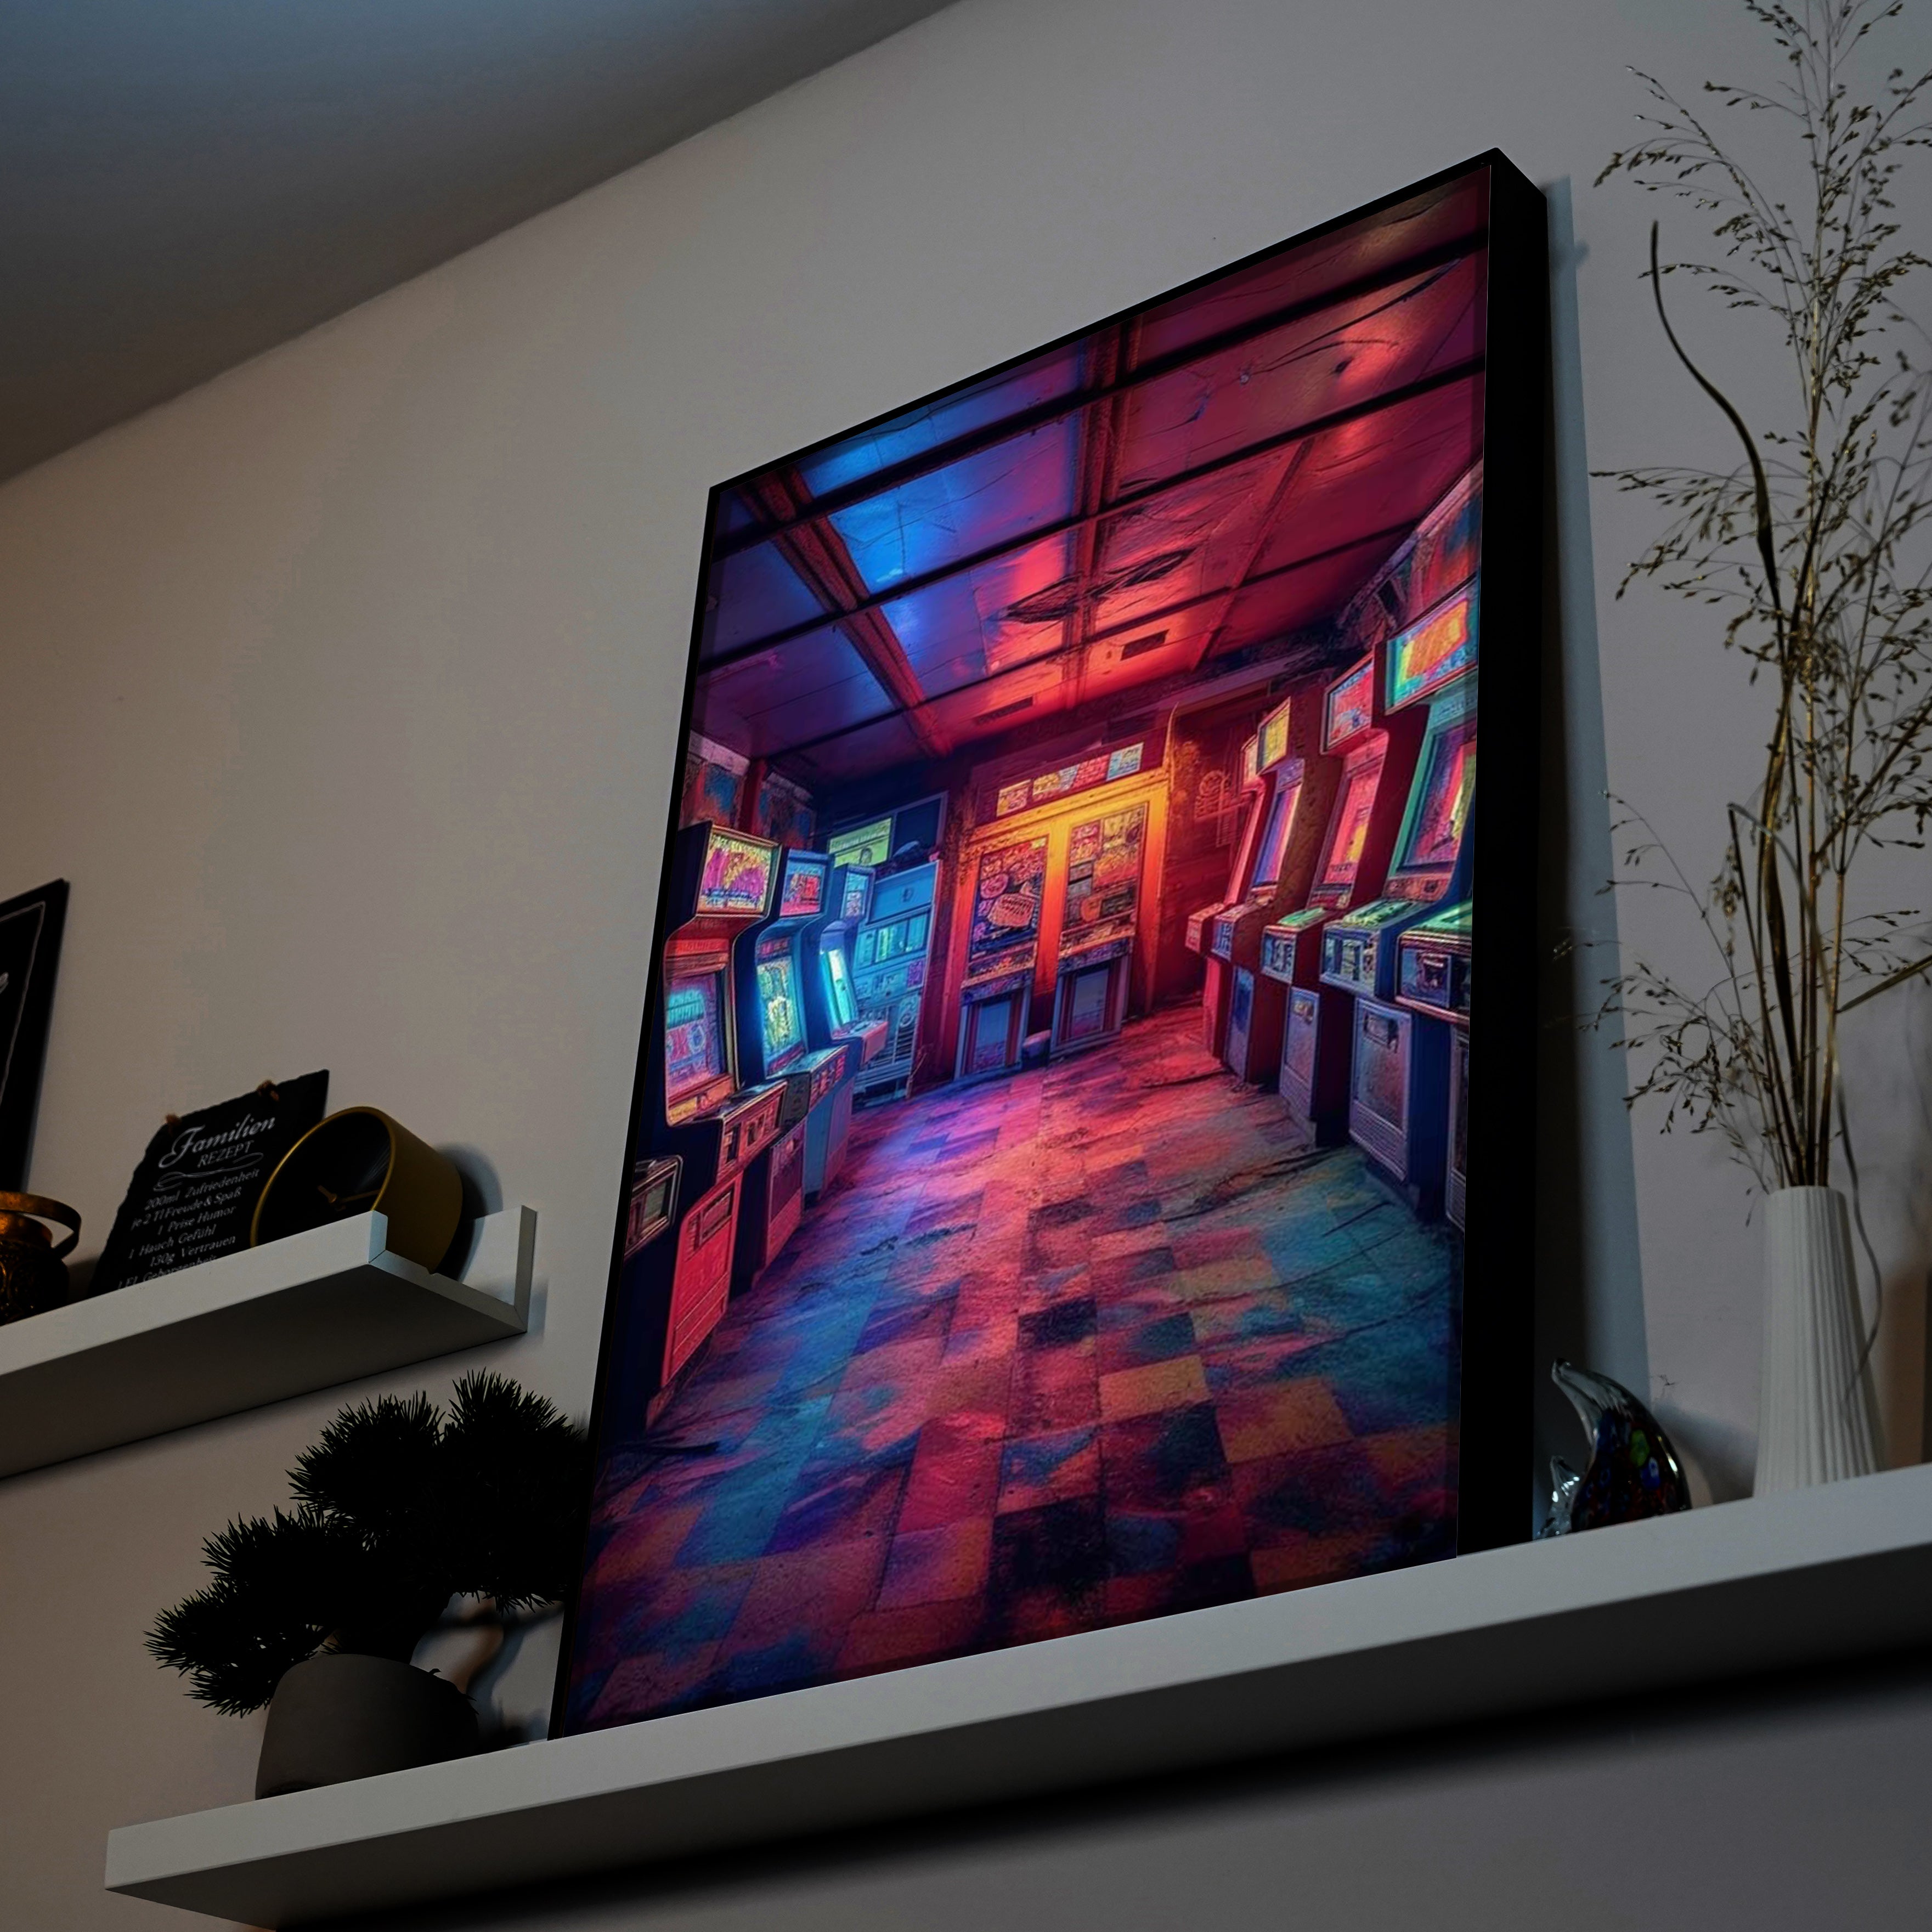 Arcade Room II | LED Bild